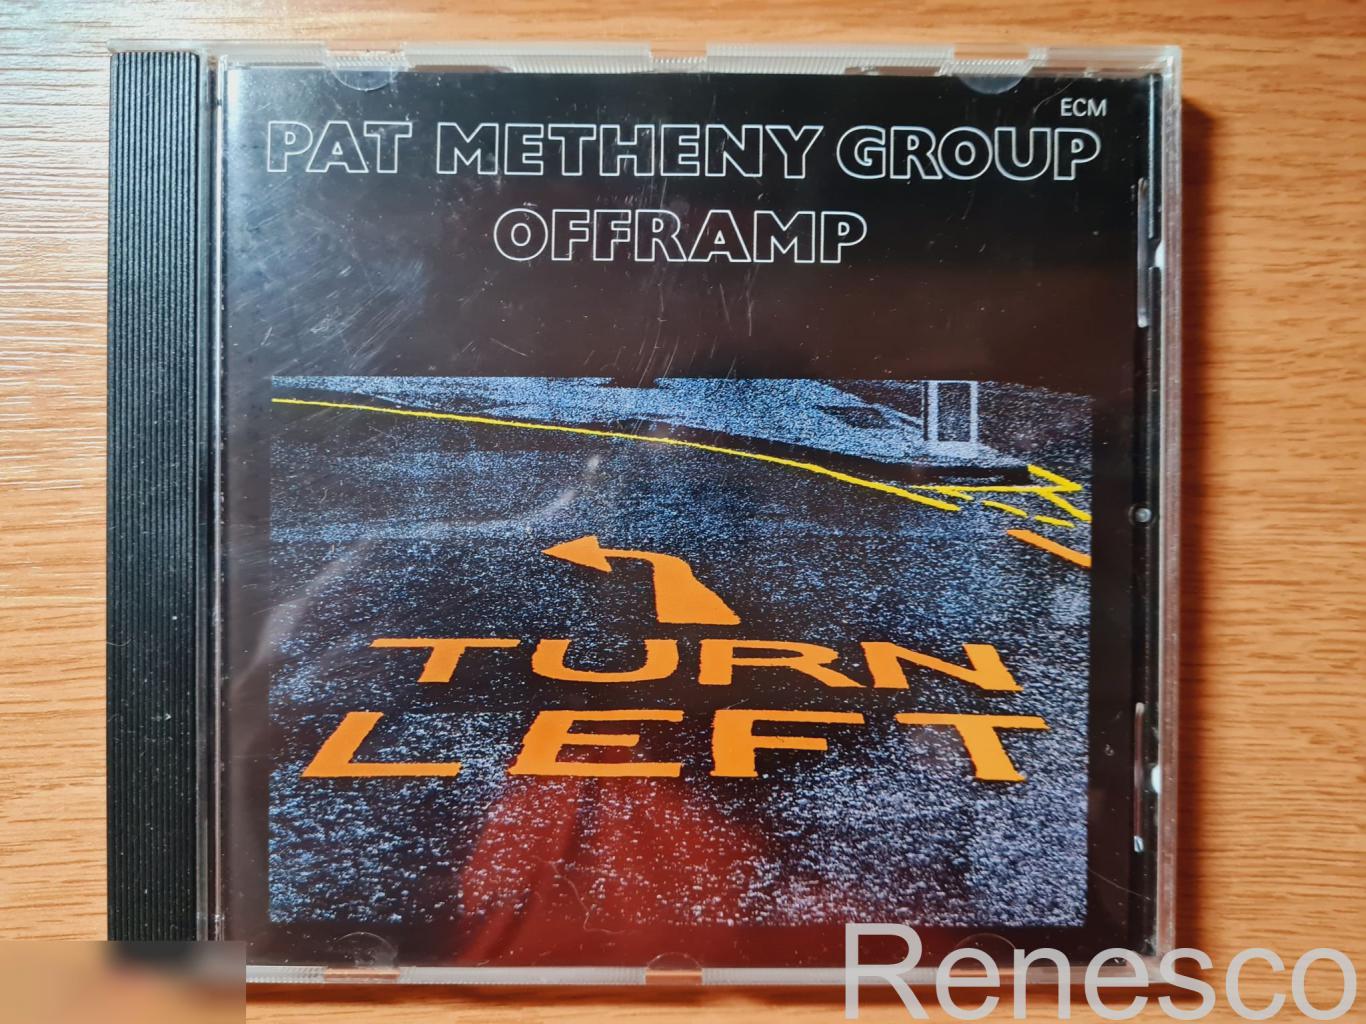 Pat Metheny Group – Offramp (Germany) (Reissue)